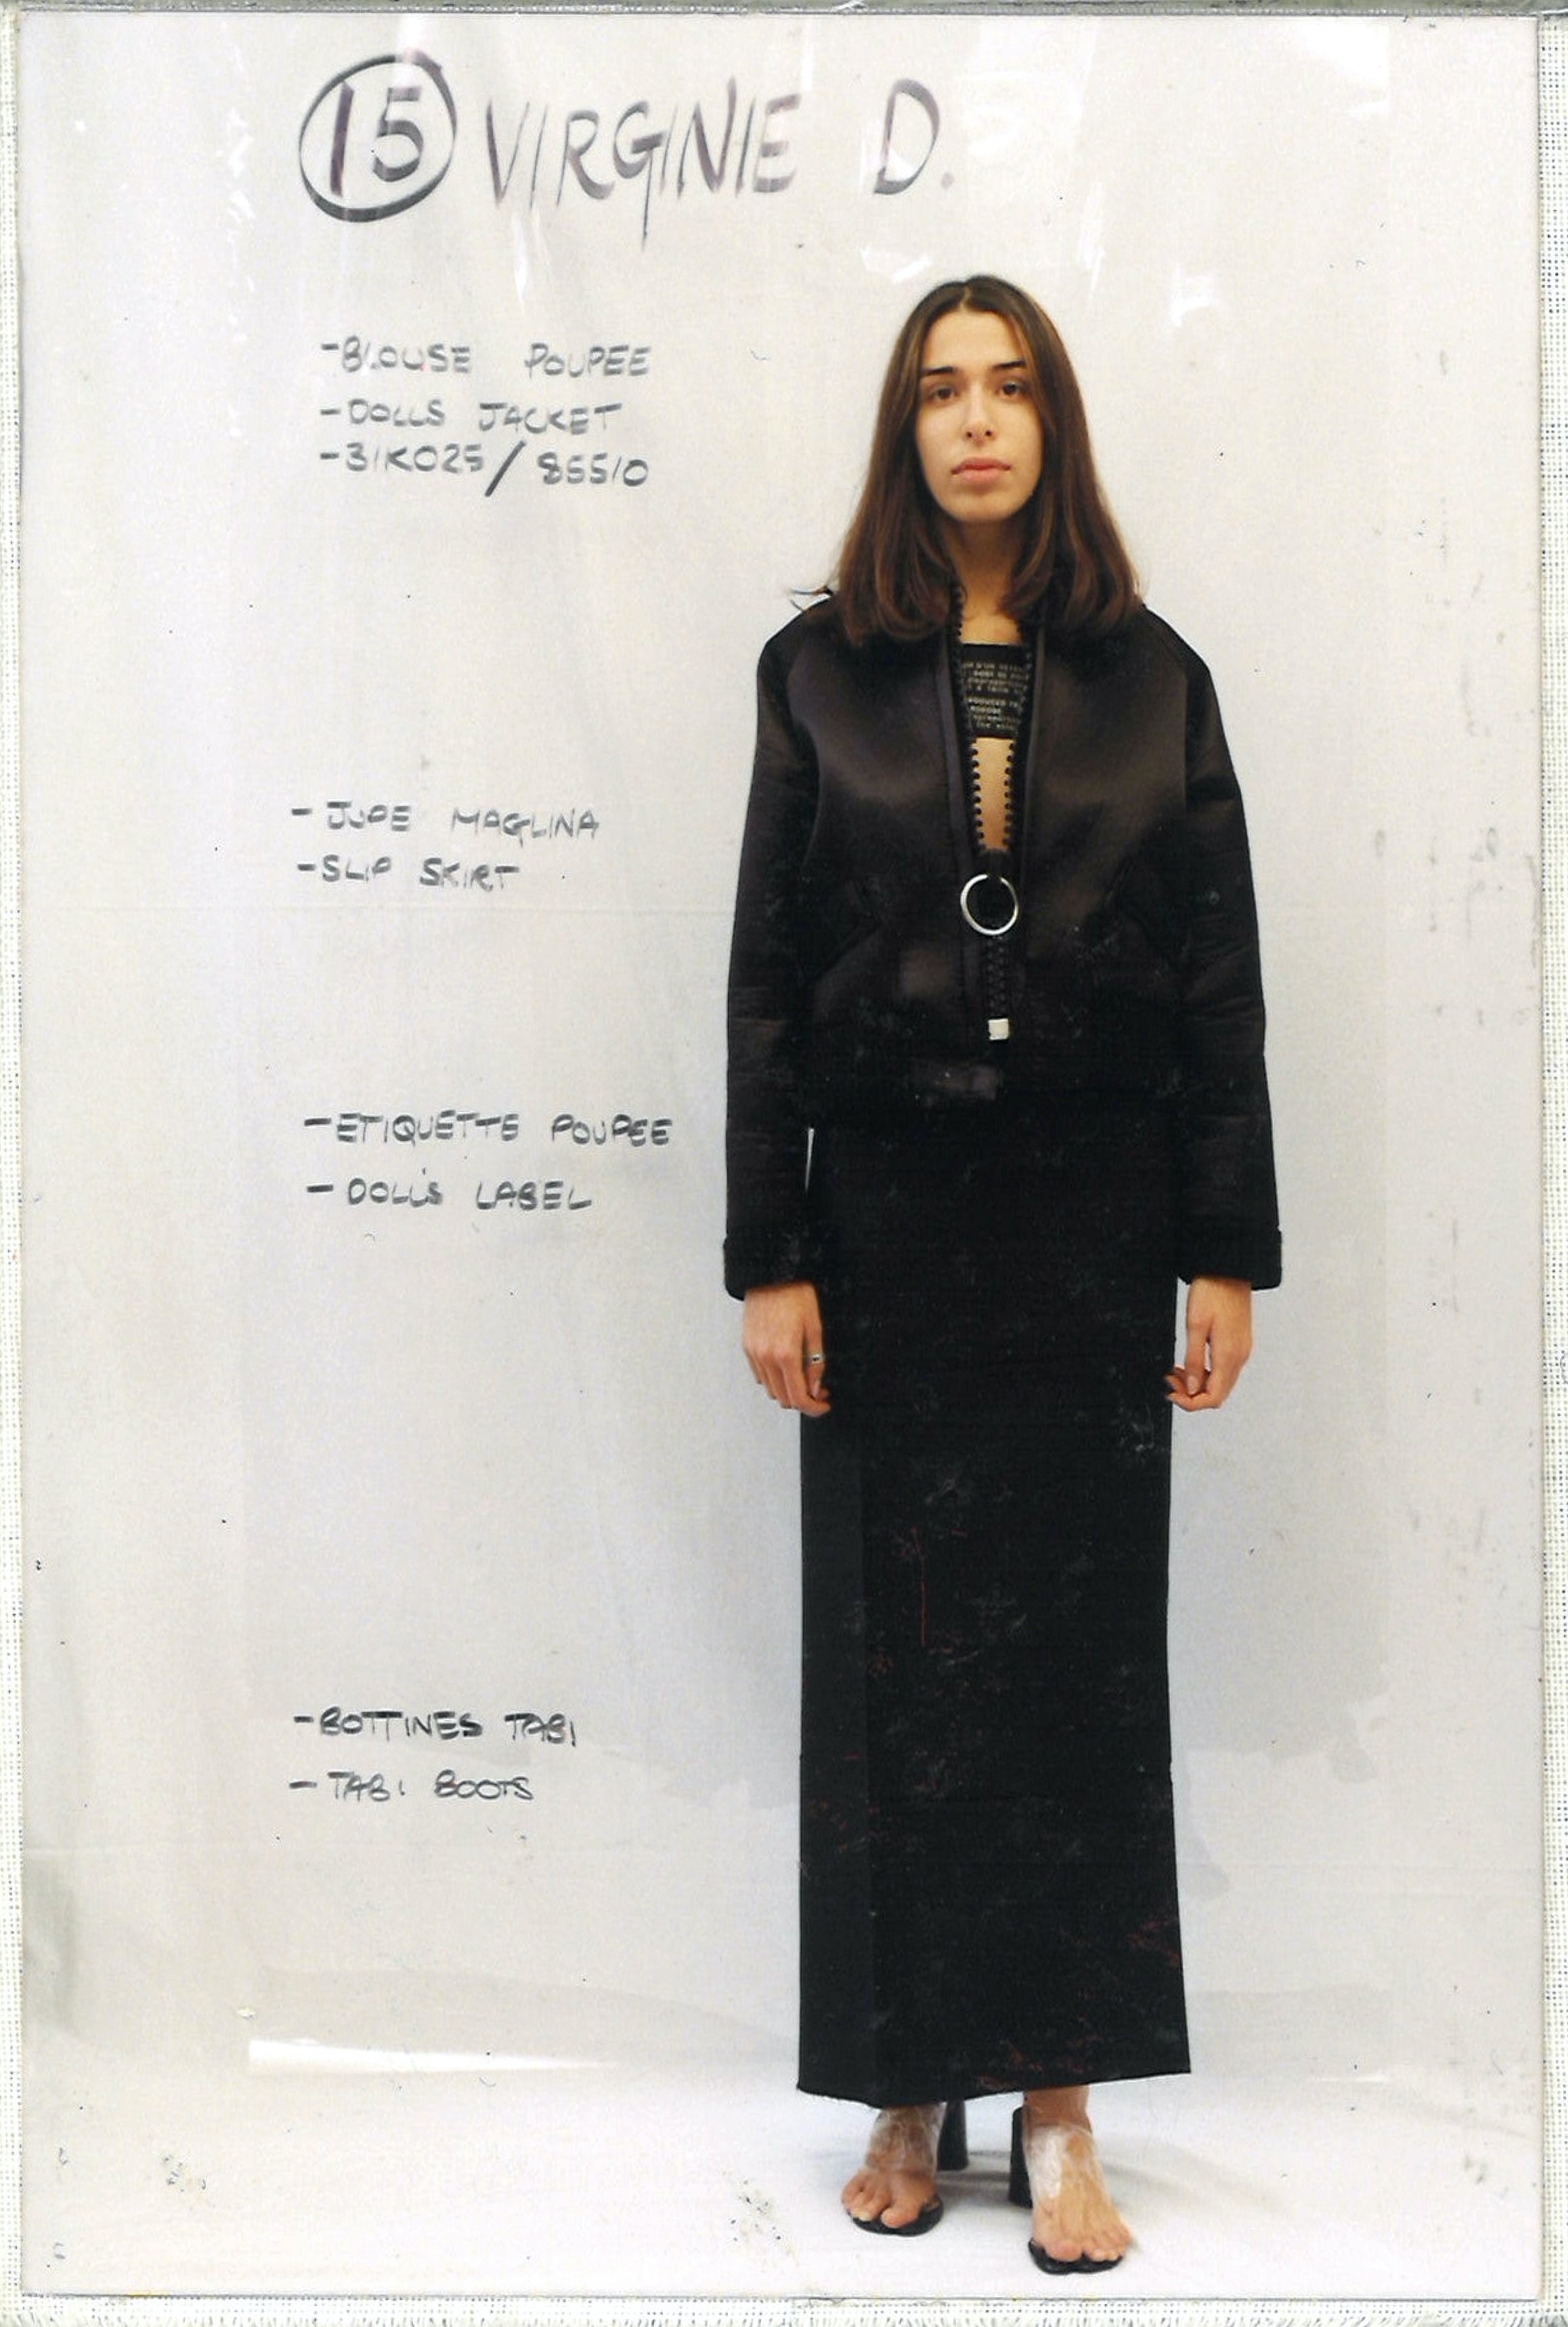 Maison Martin Margiela Lookbook
Womenswear Collection Spring/Summer 1999